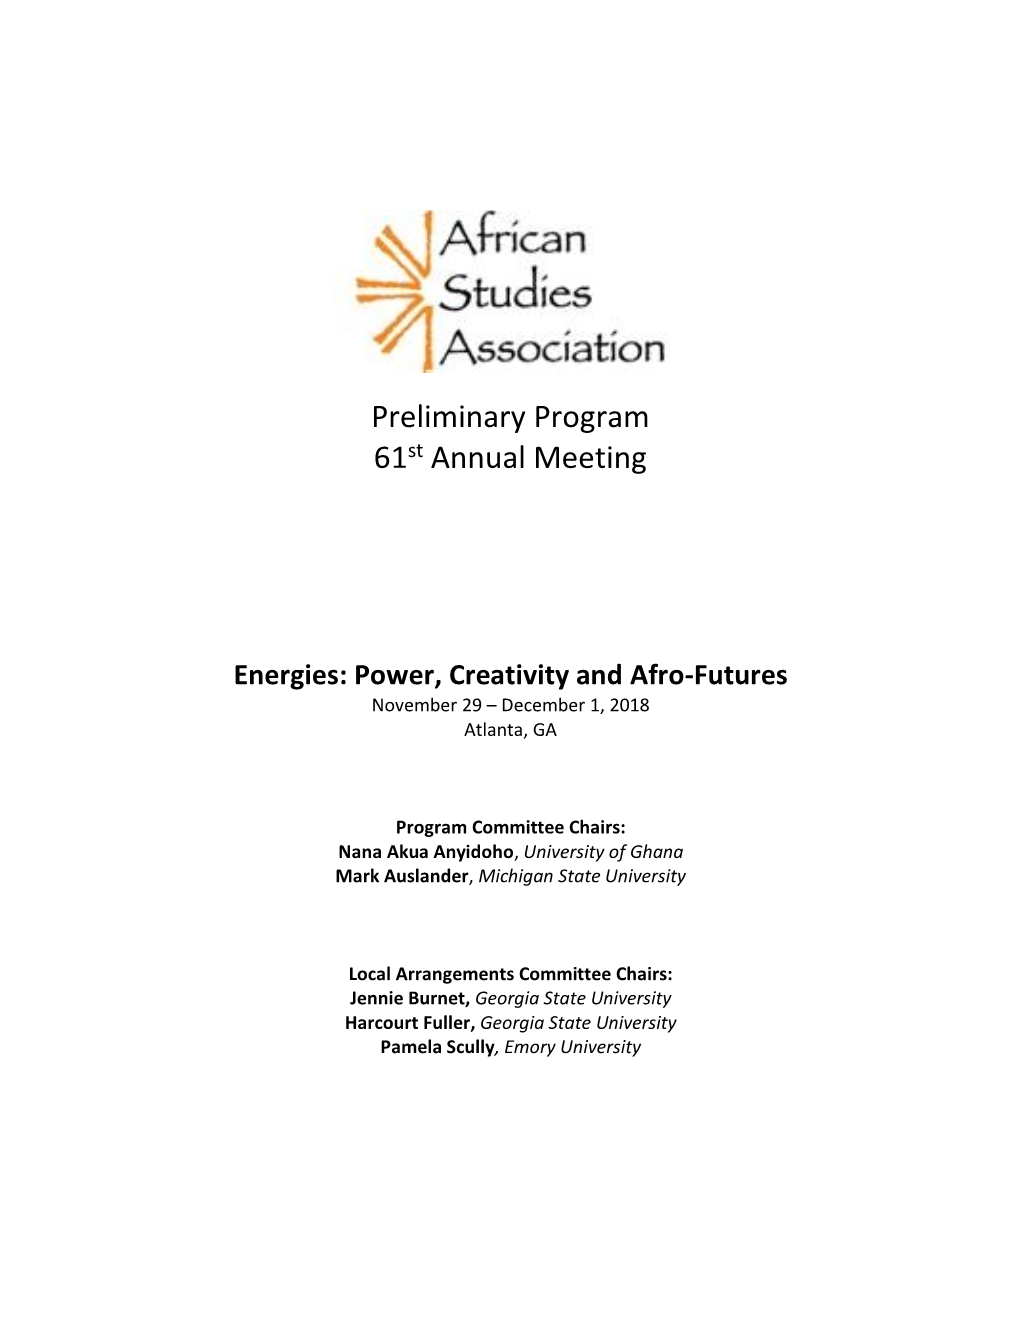 The African Studies Association 61St Annual Meeting Program